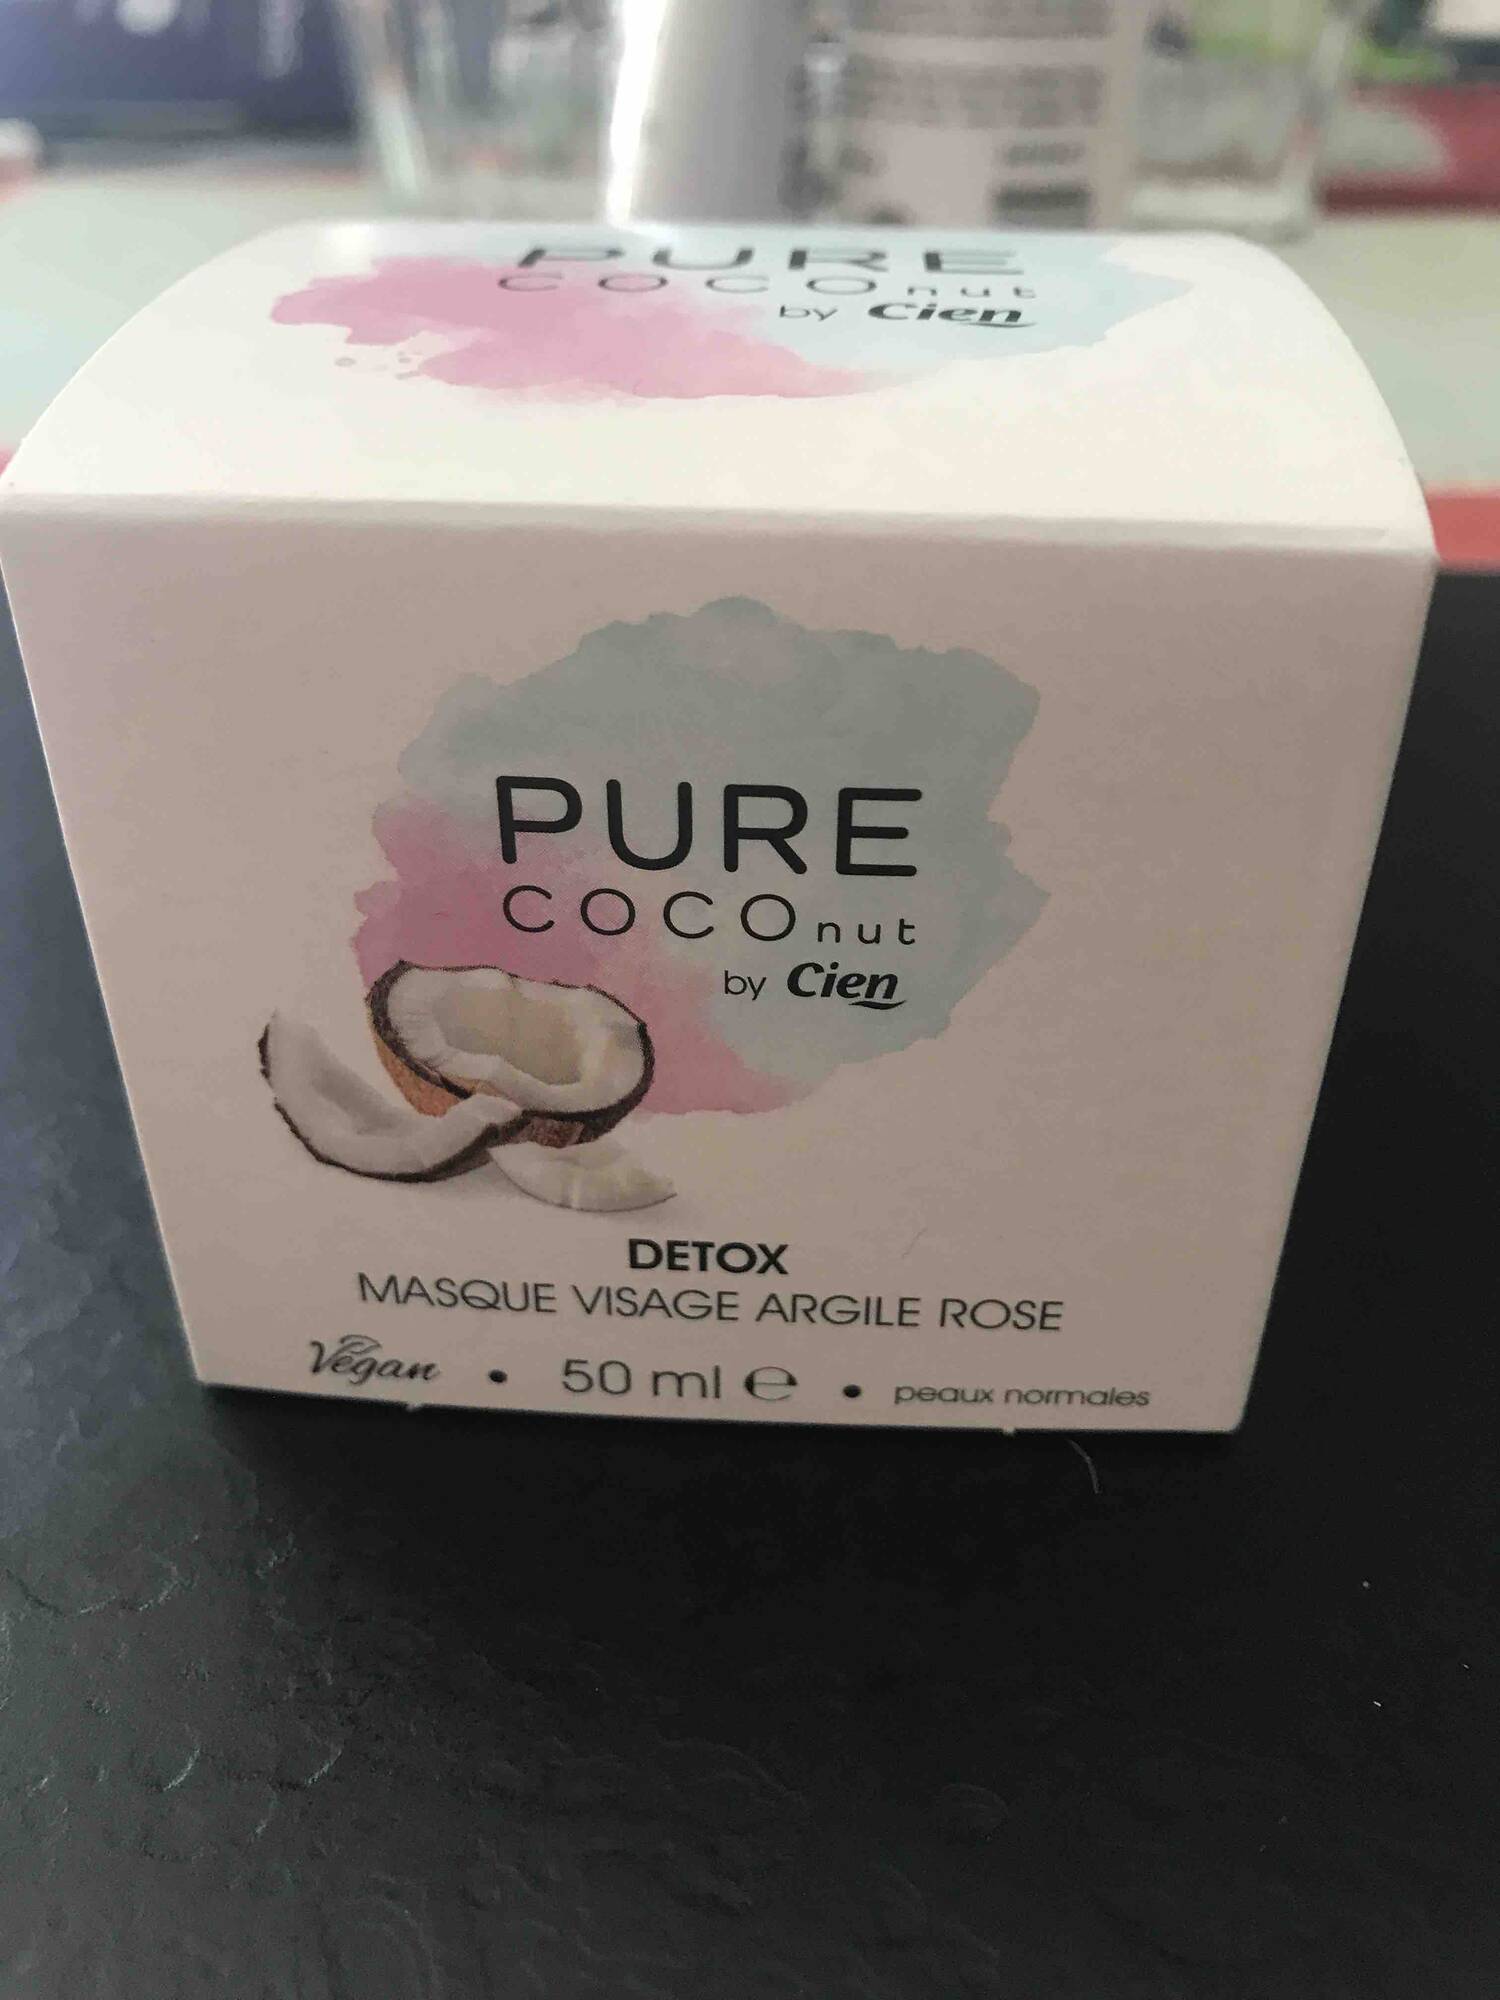 CIEN - Pure coconut - Masque visage argile rose